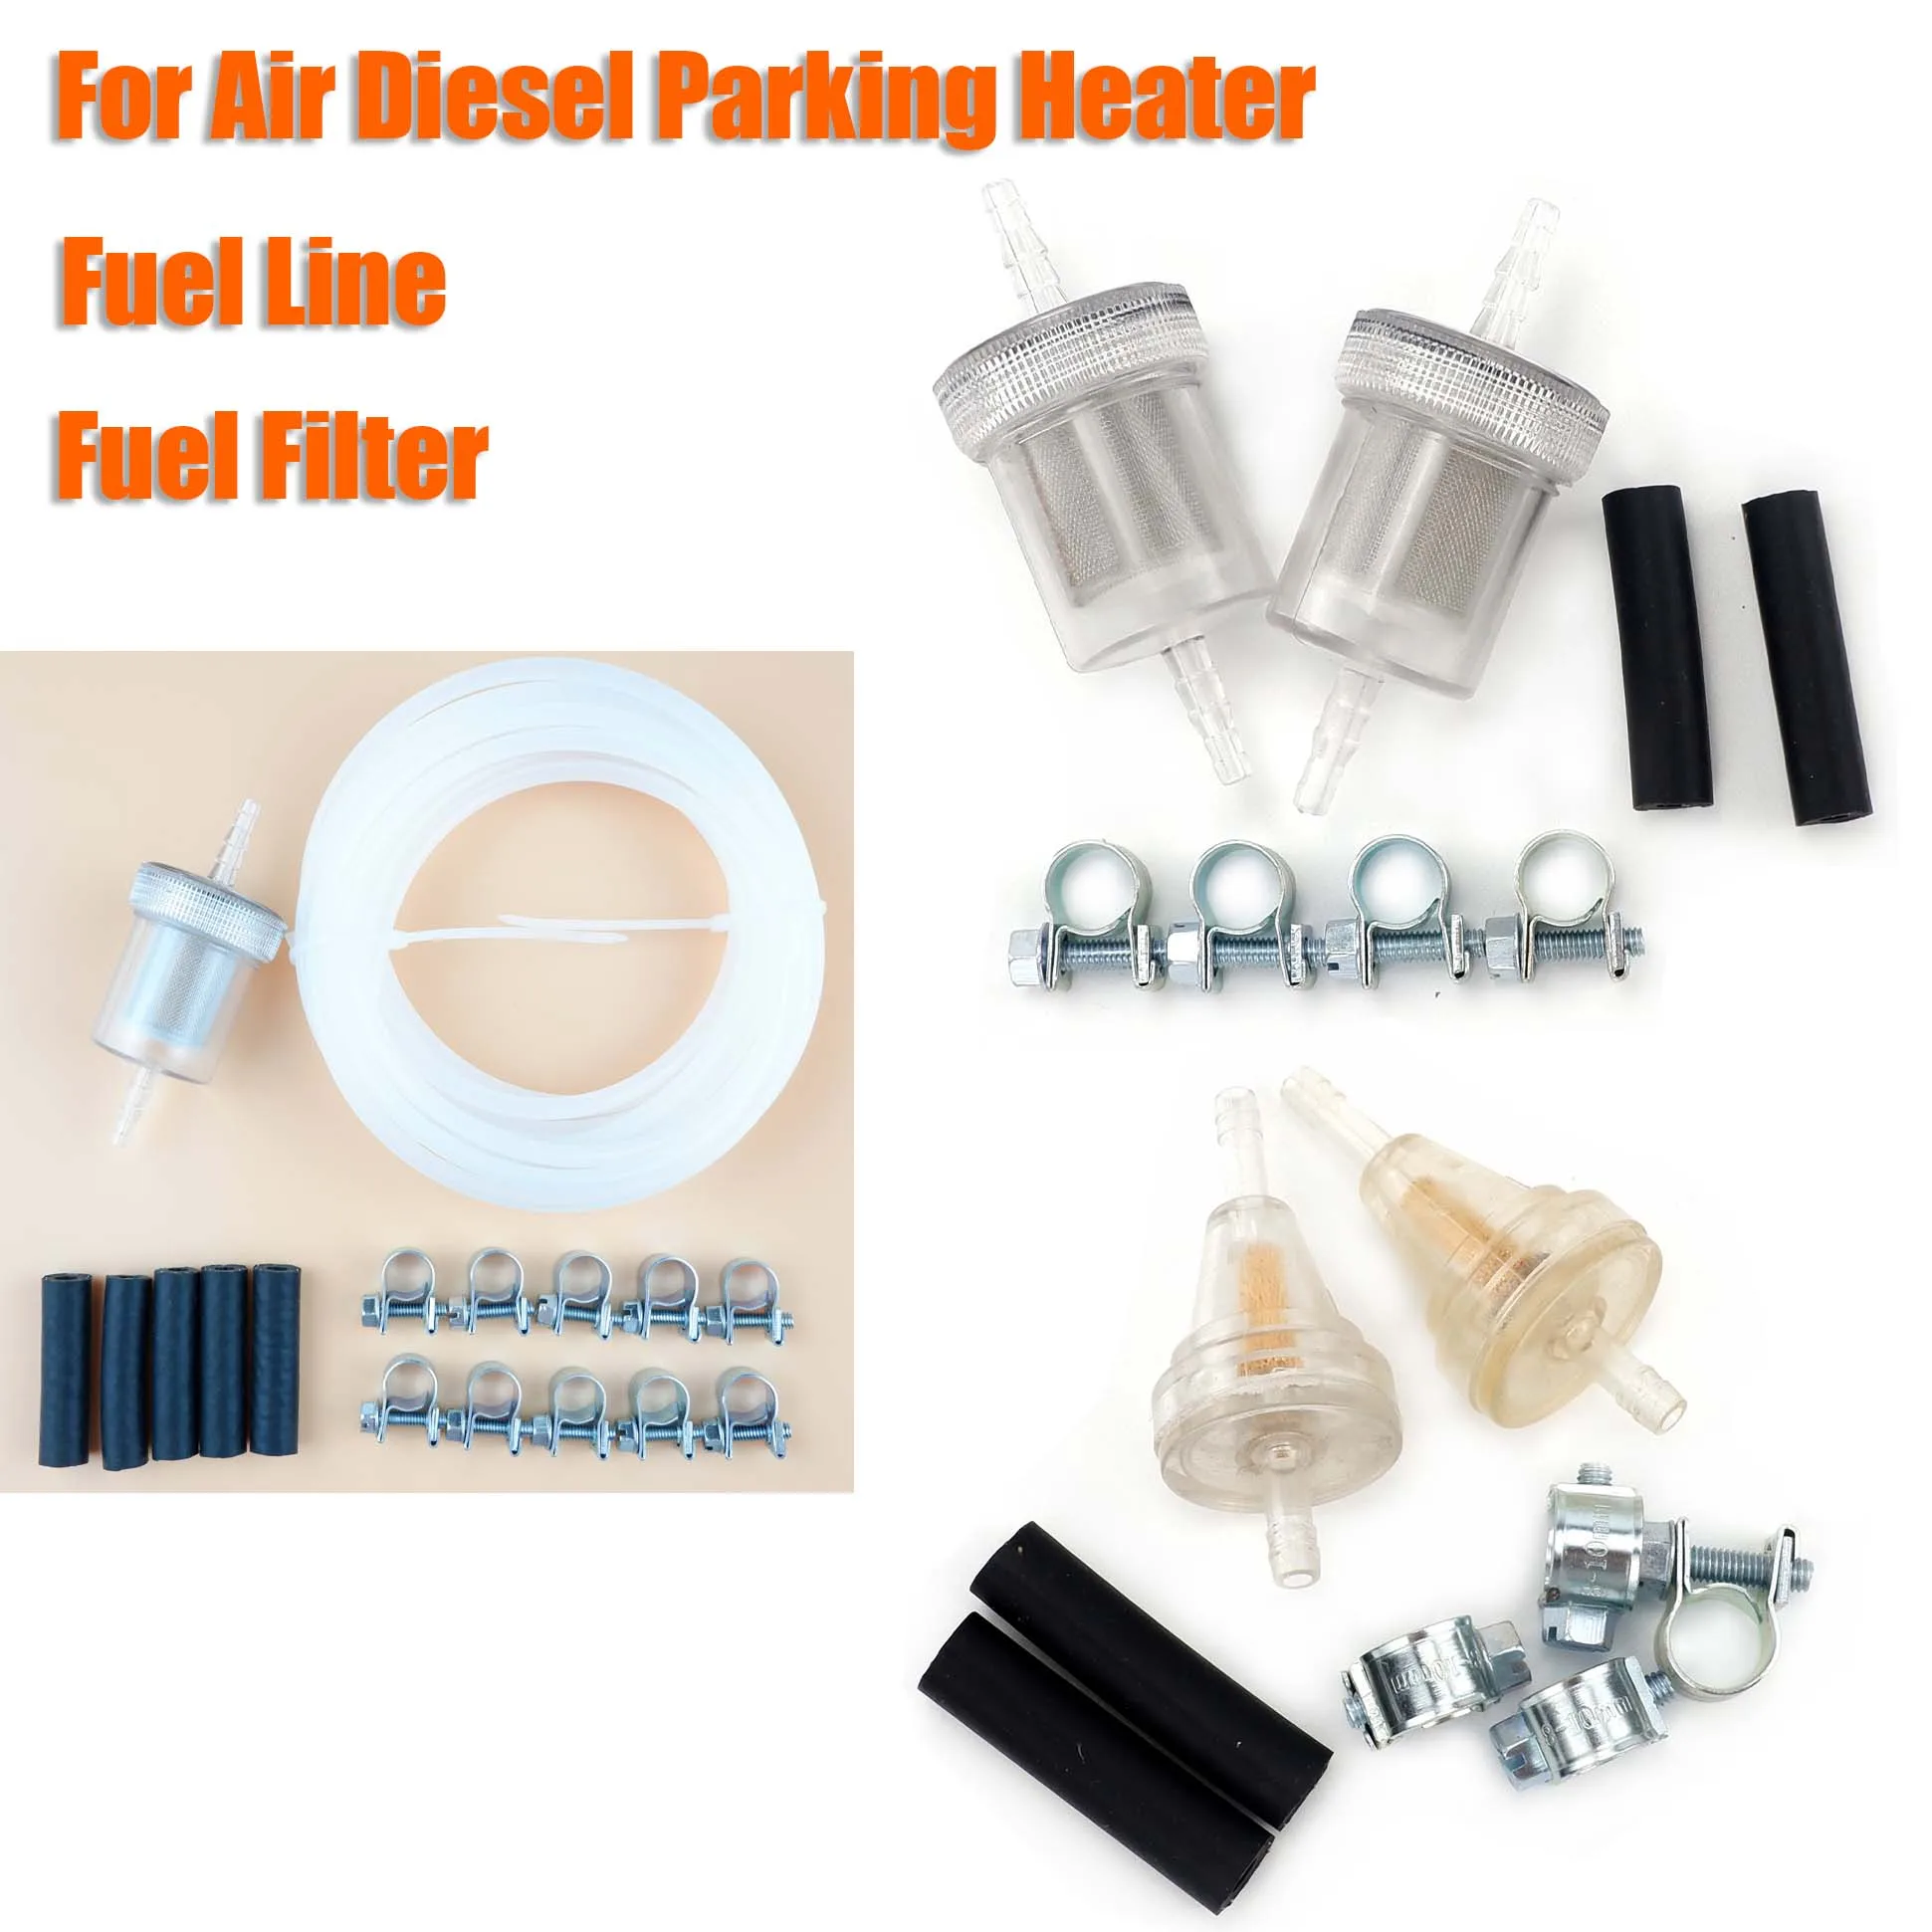 Car Truck Air Diesel Parking Heater Fuel Line + Fuel Filter + Connction Hose + Clip Kit For Webasto Eberspacher